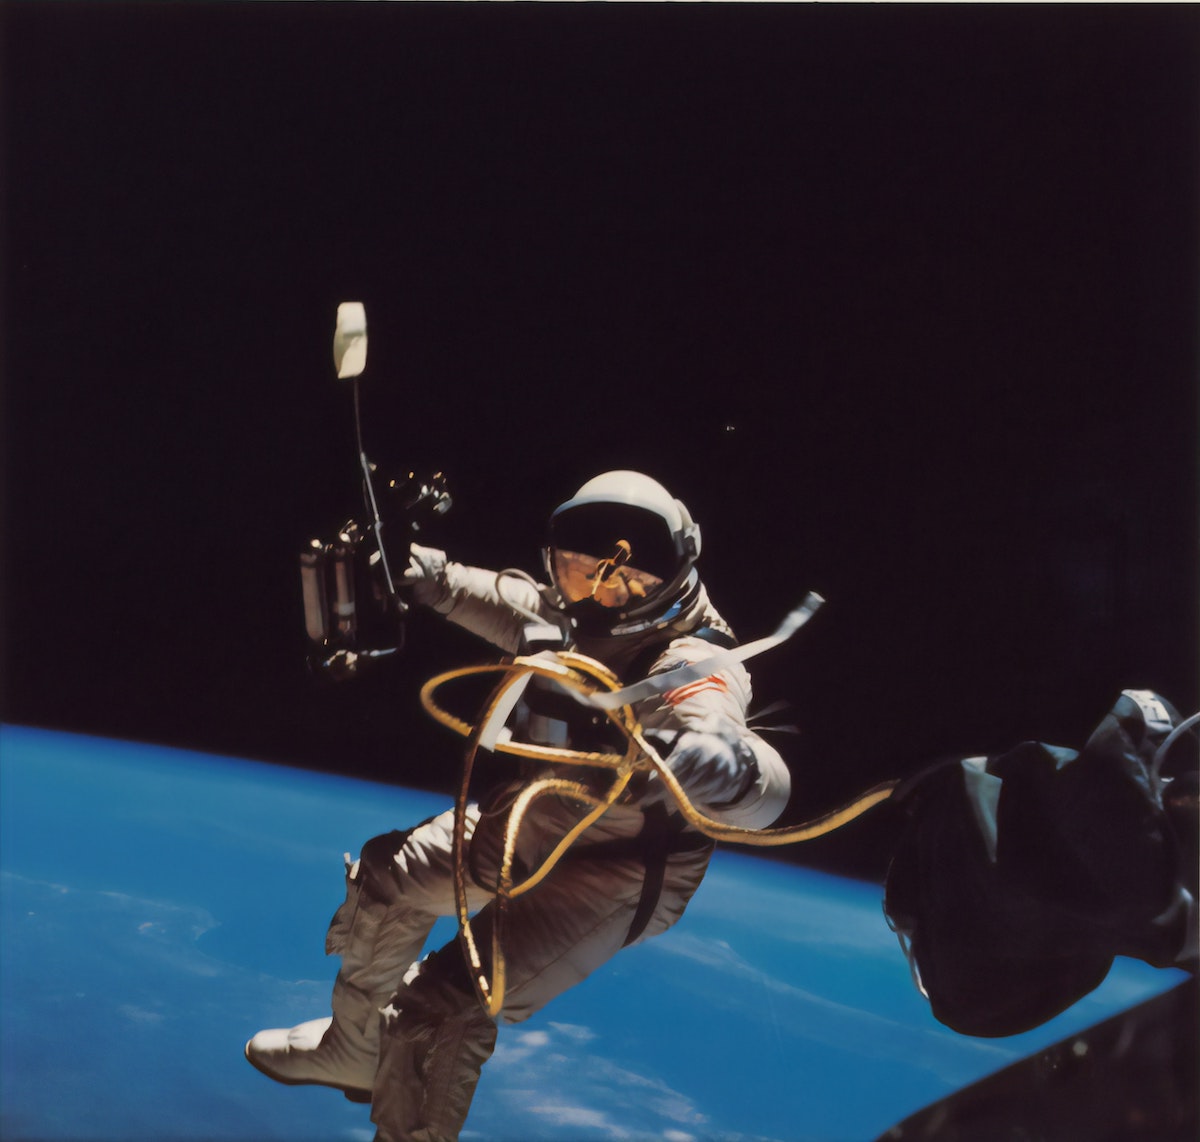 Astronaut - Photo by Elia Pellegrini, borrowed from Unsplash